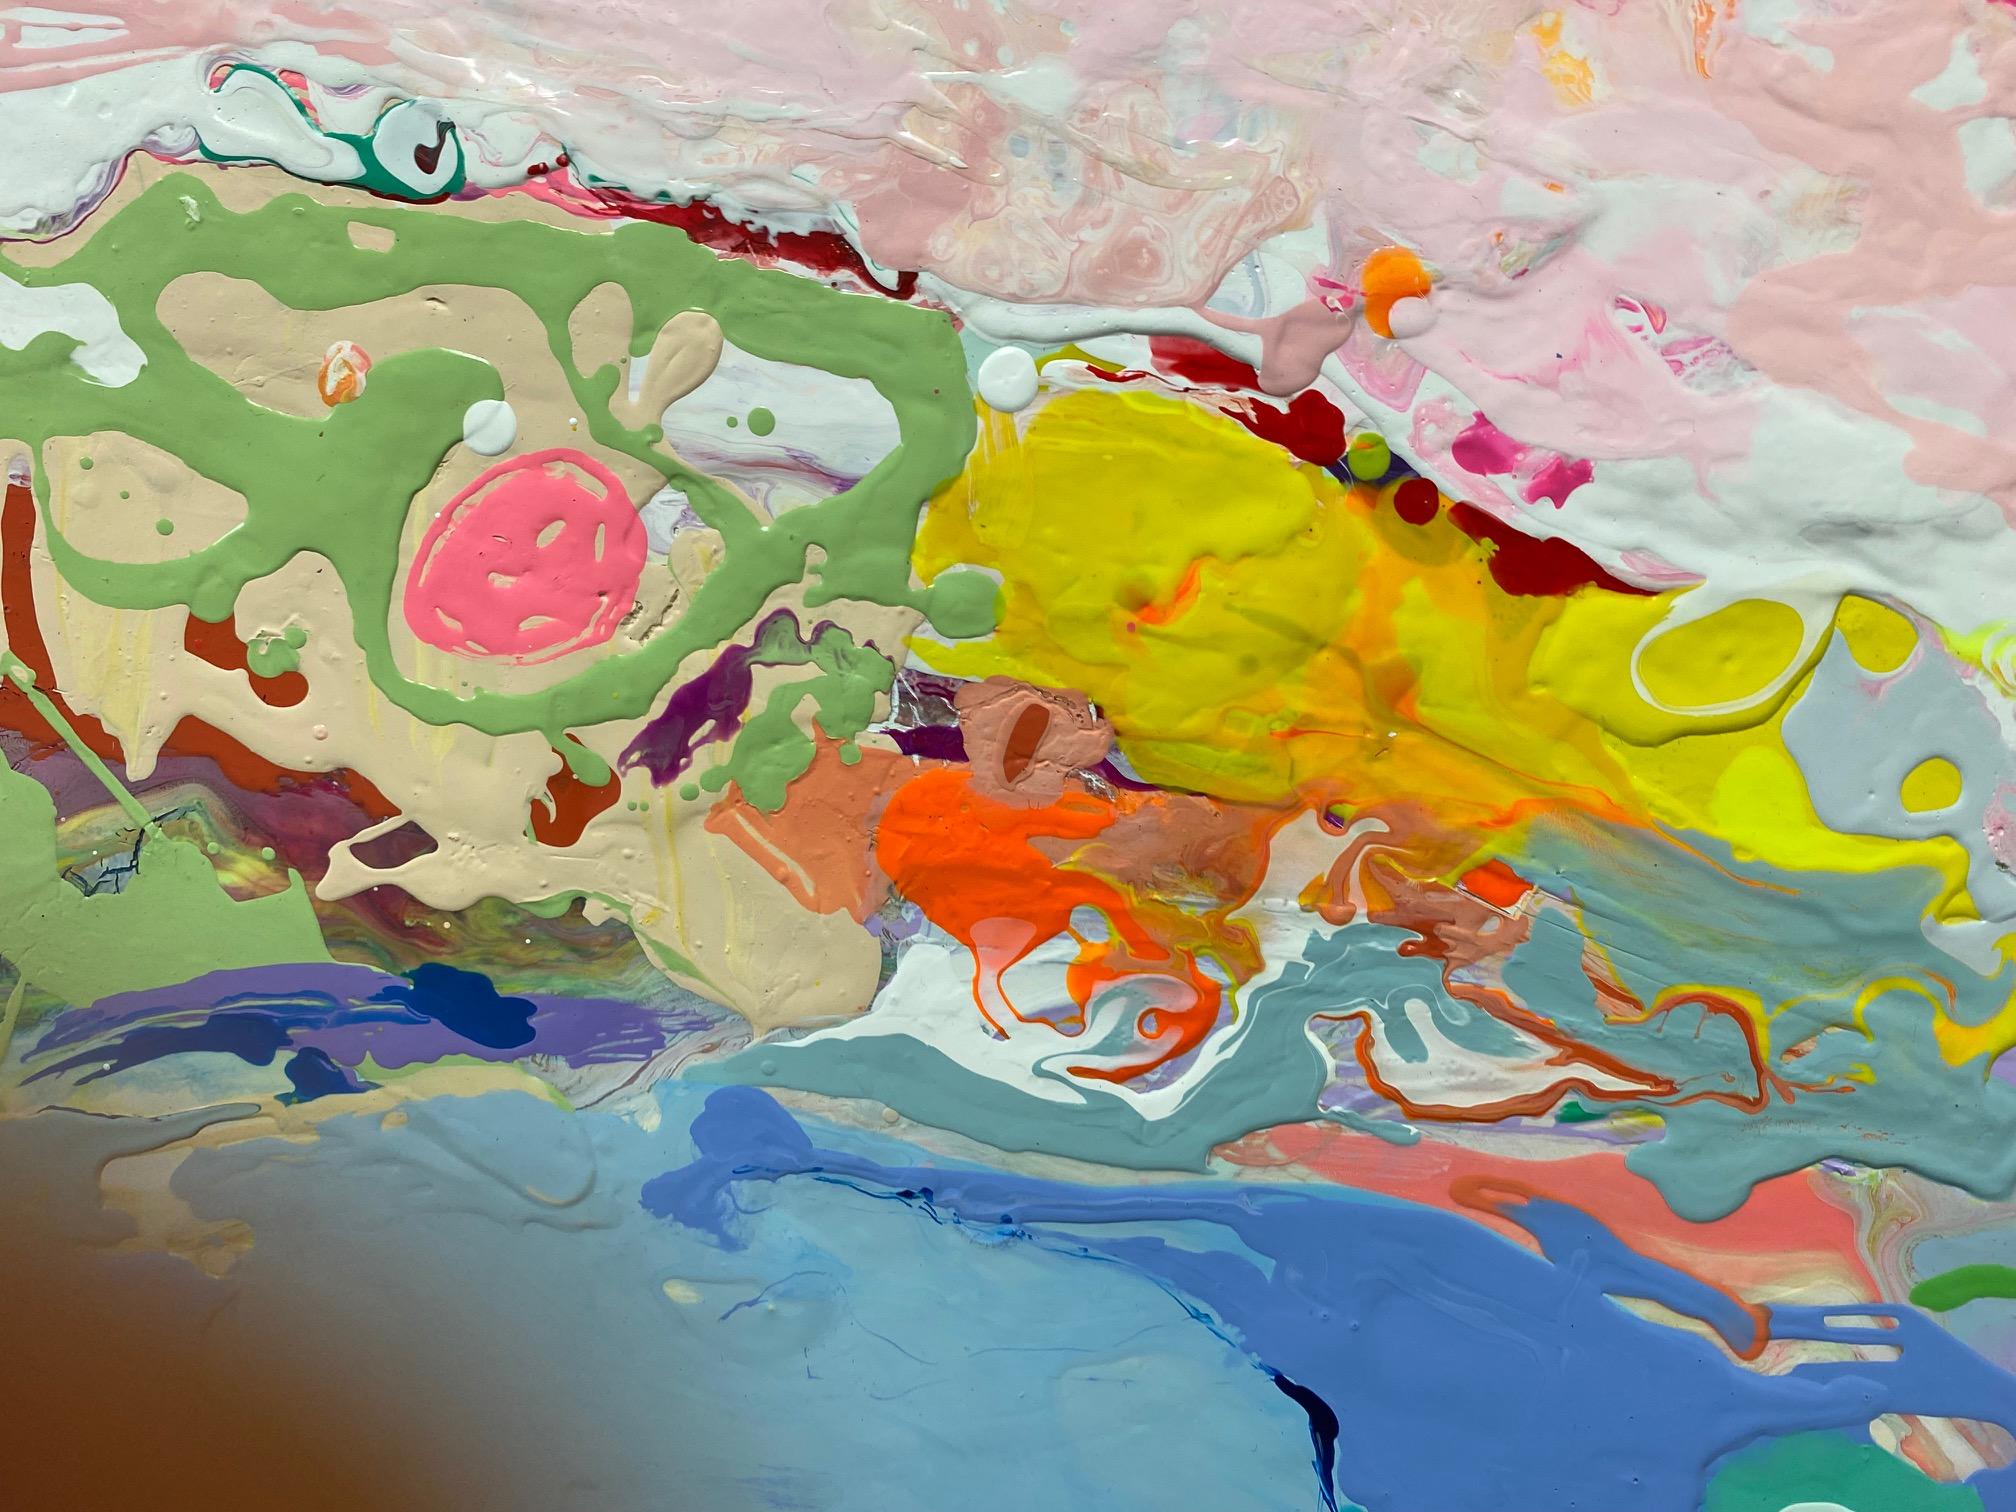 Day Break, original 60x48 abstract expressionist acrylic landscape - Abstract Expressionist Painting by Carol Carpenter